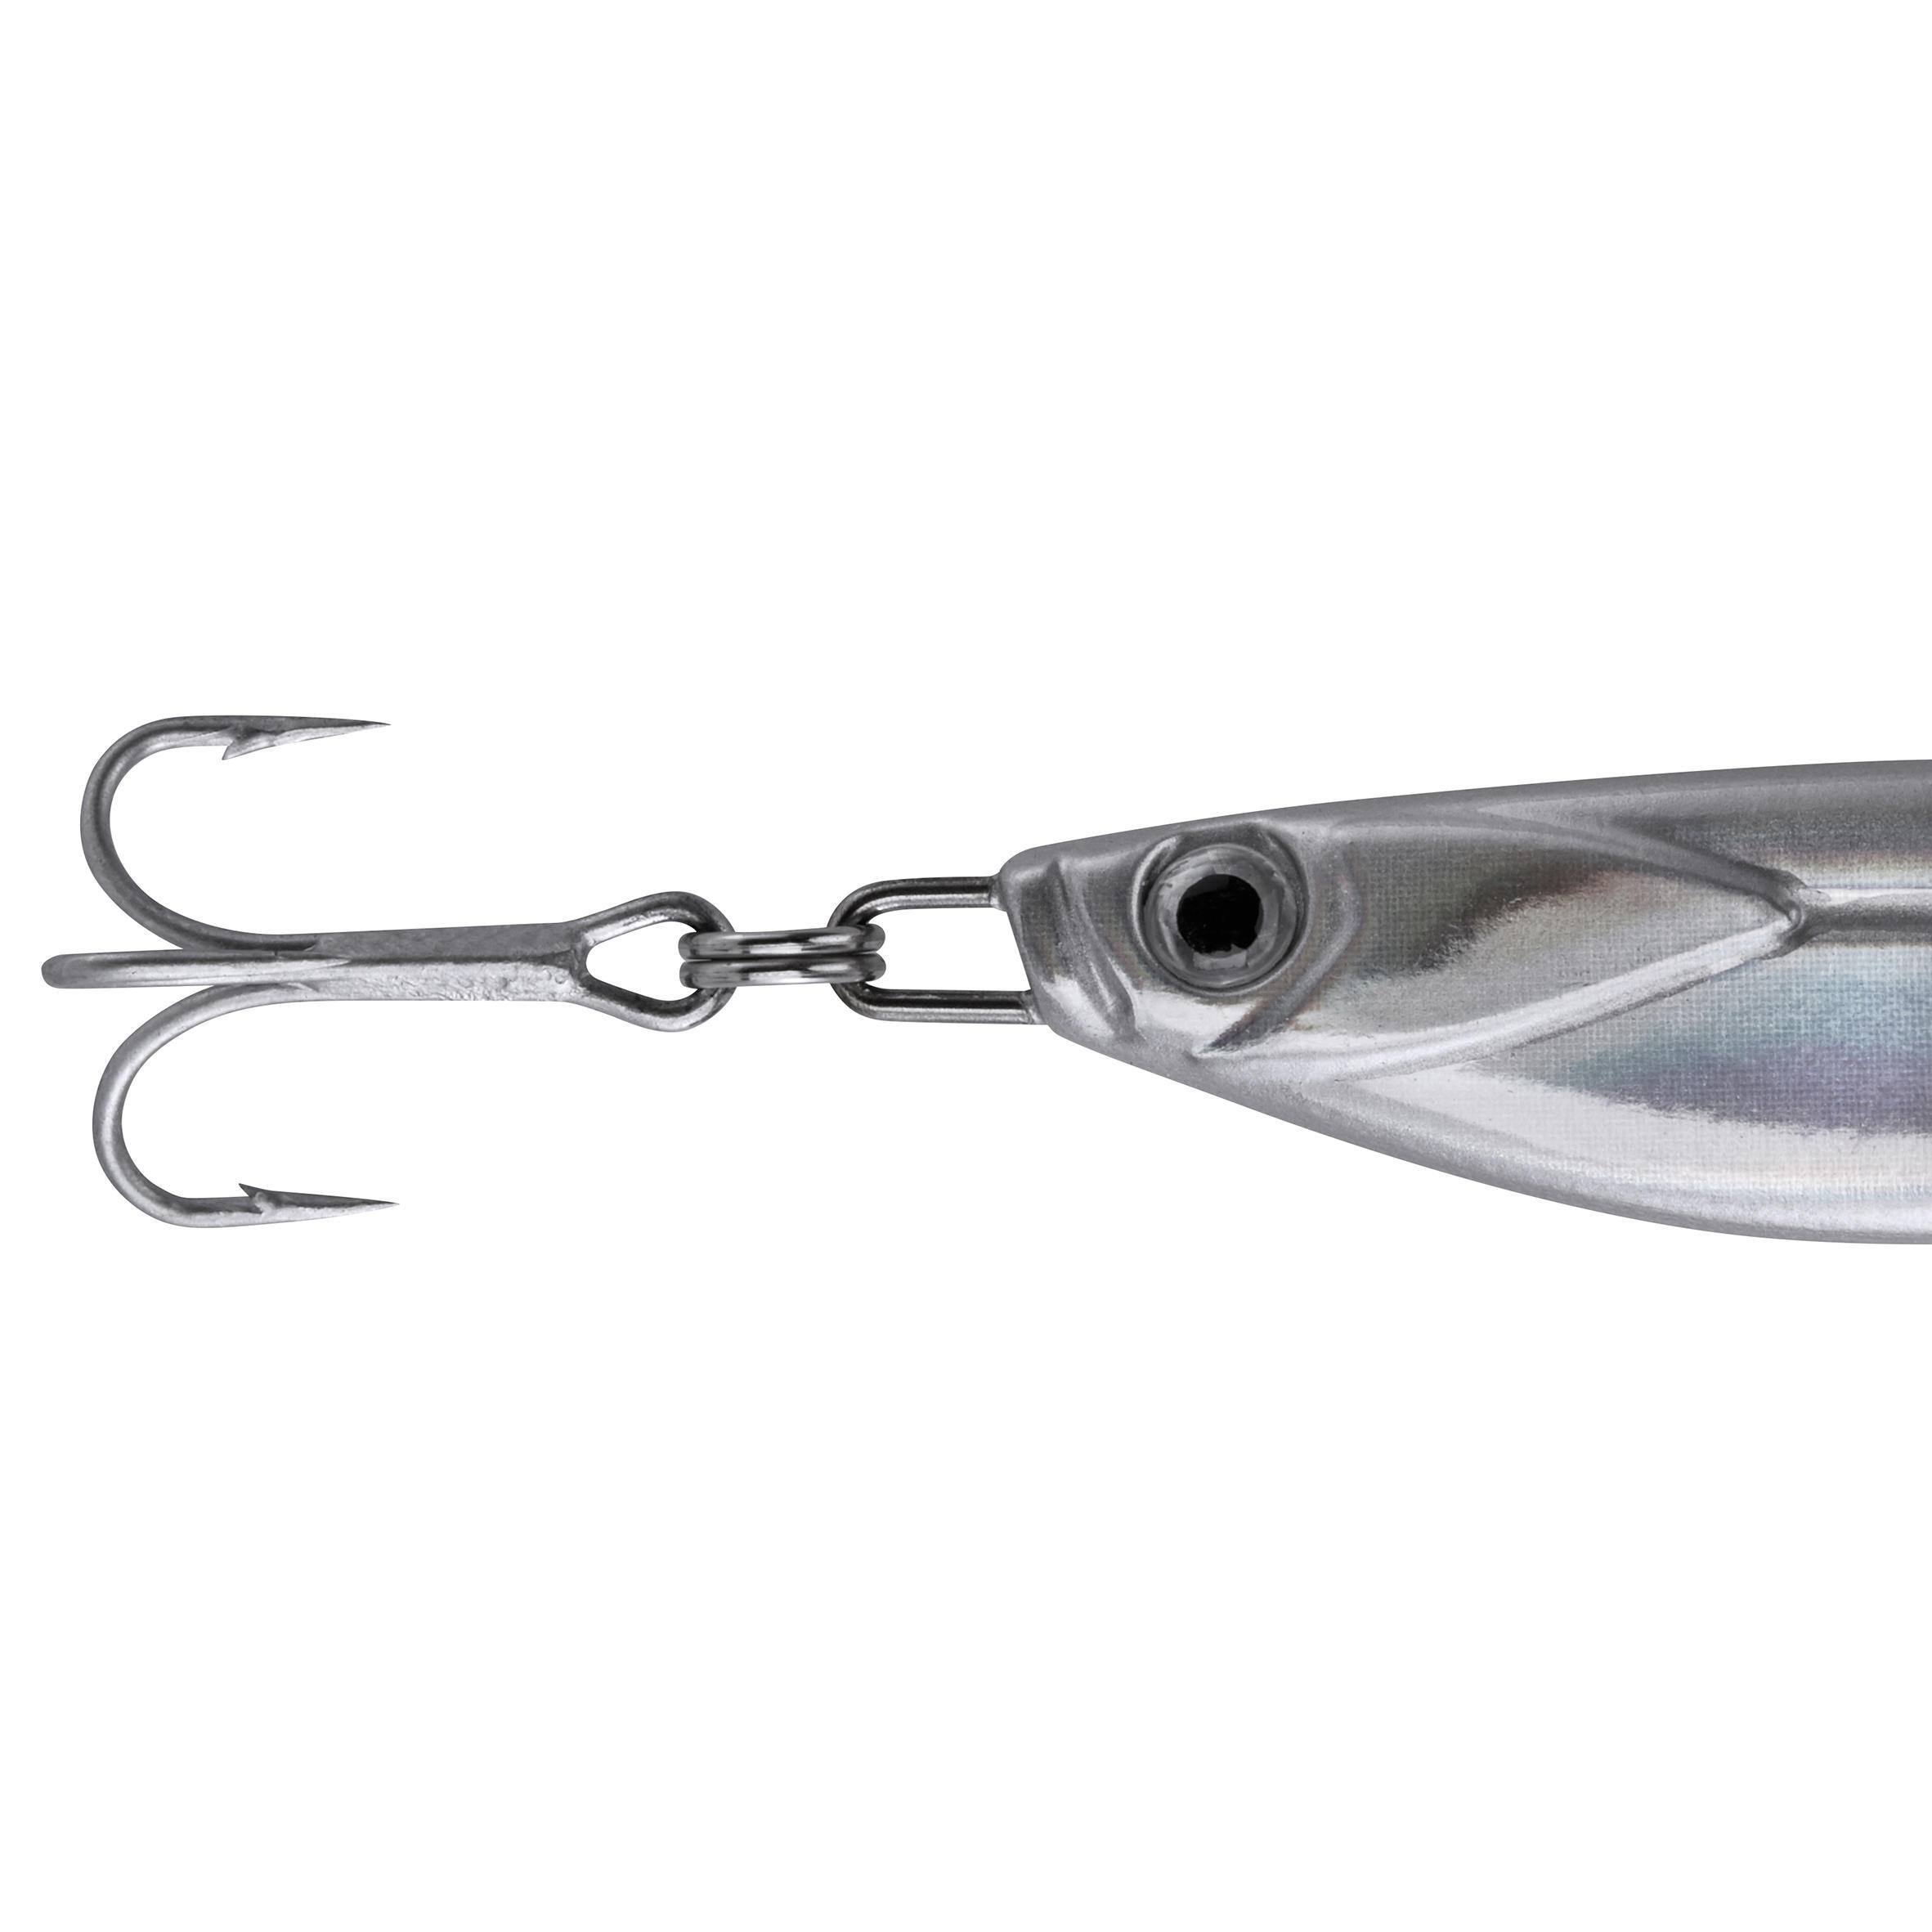 Seaspoon spoon 60g silver lure fishing 3/5